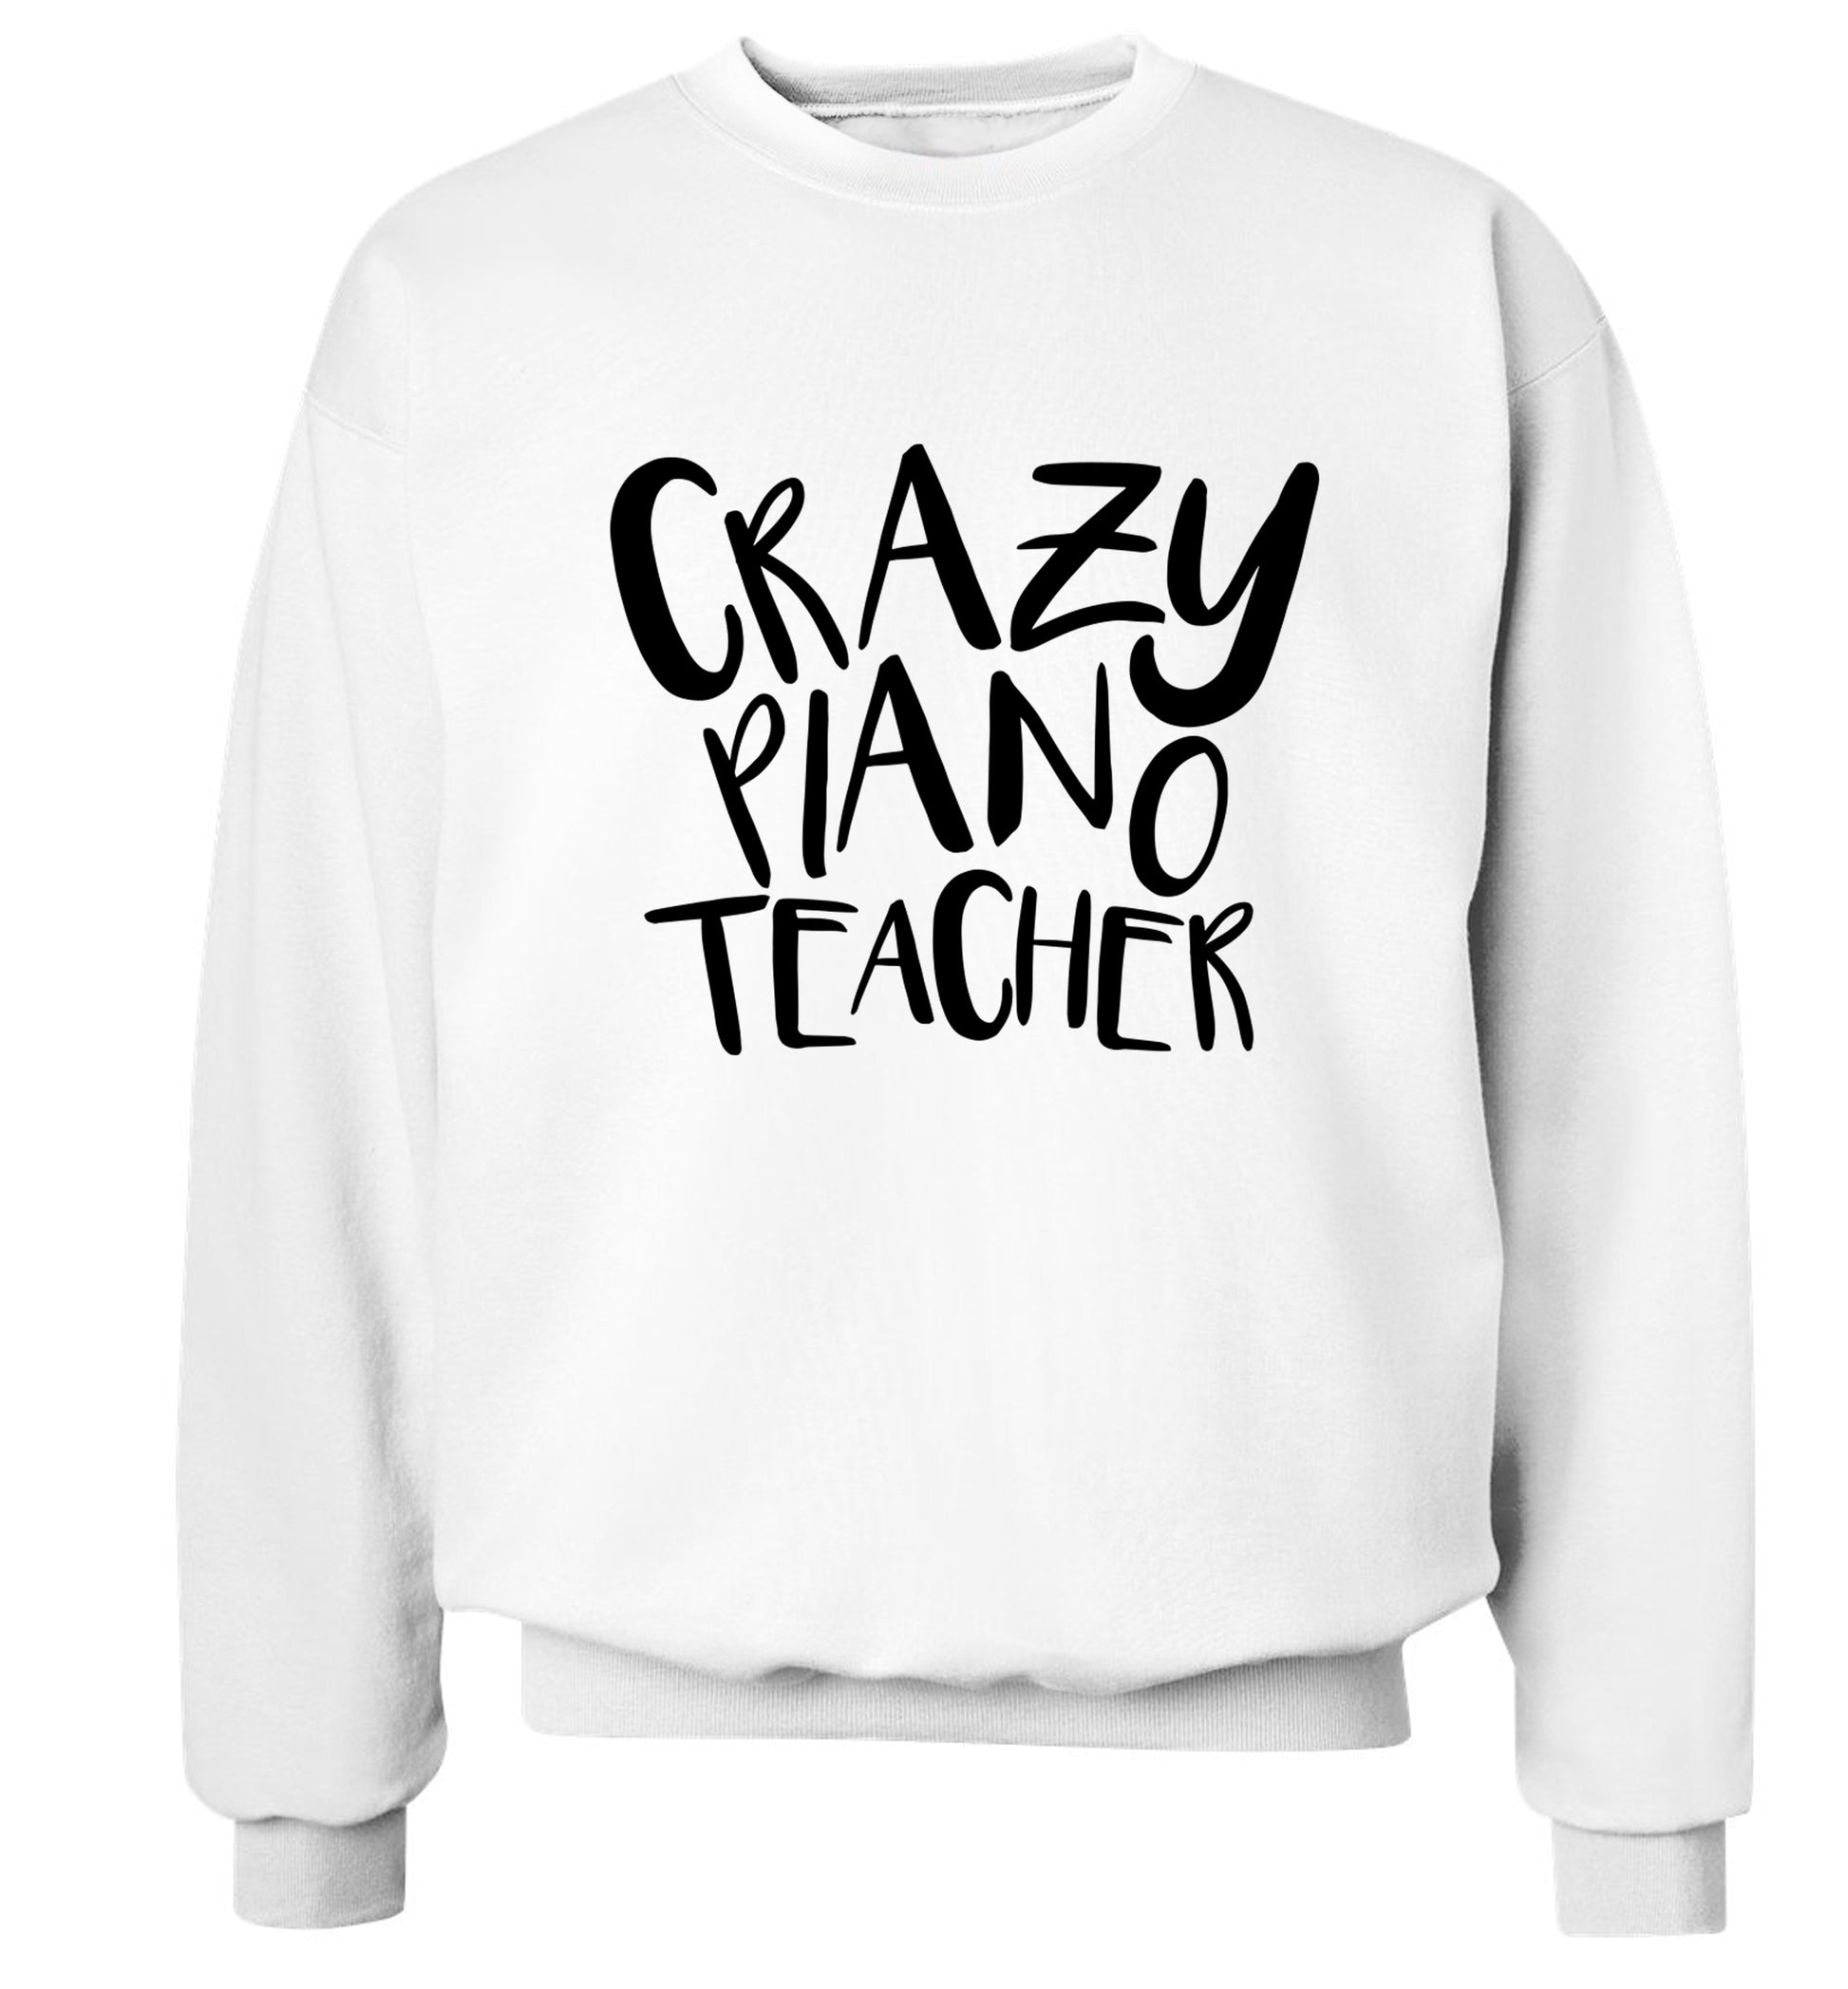 Crazy piano teacher Adult's unisex white Sweater 2XL